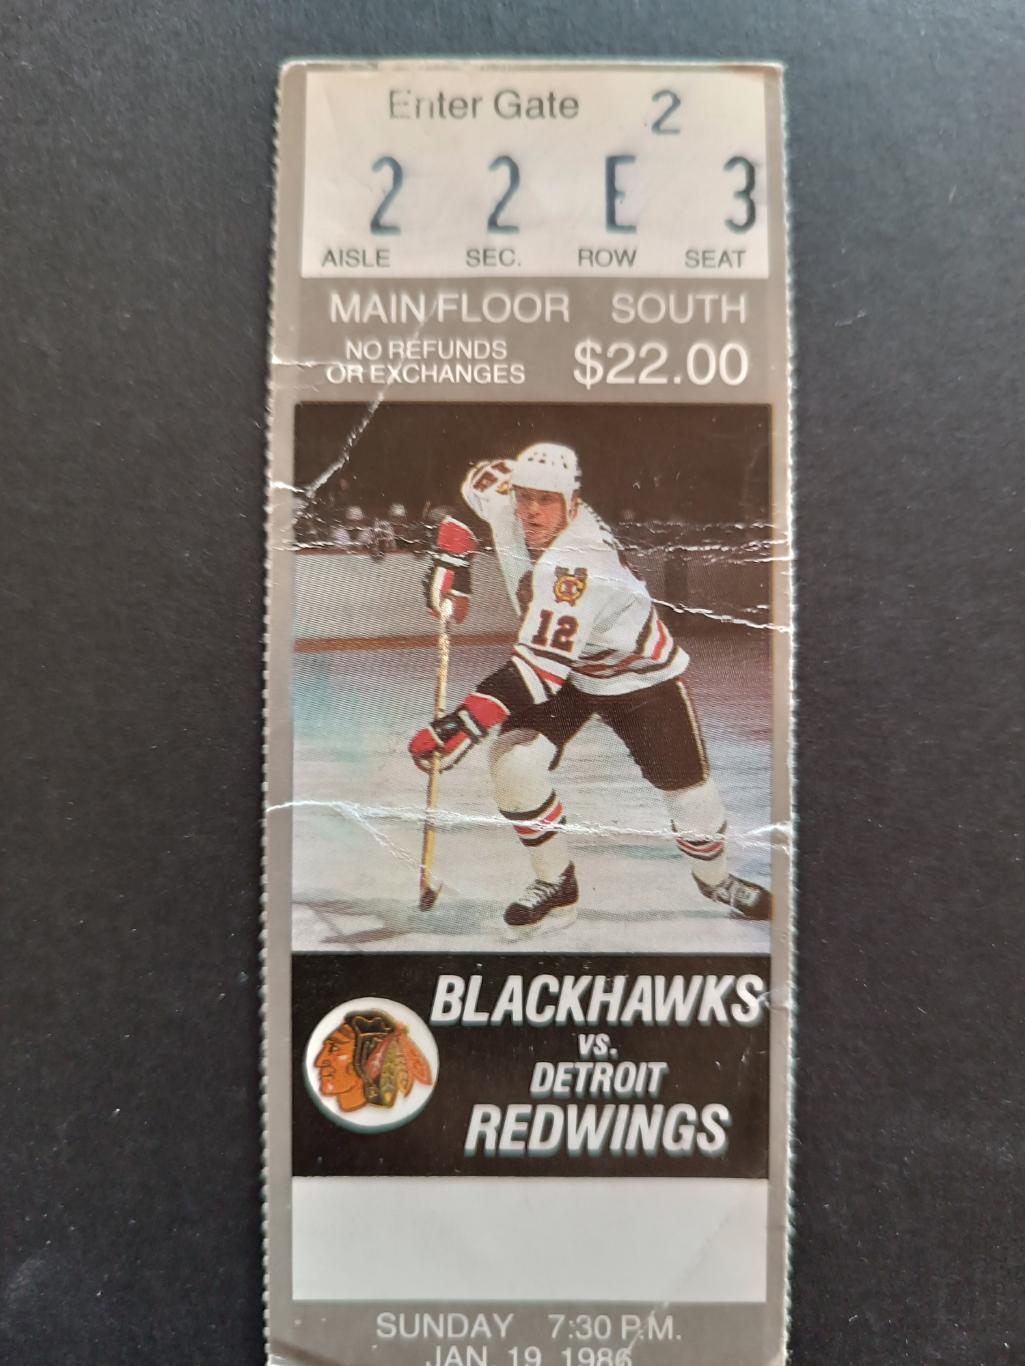 БИЛЕТ МАТЧА ХОККЕЙ БЛЭКХОУКС ДЕТРОЙТ 1986 JAN 19 NHL BLACK HAWKS VS. DETROIT